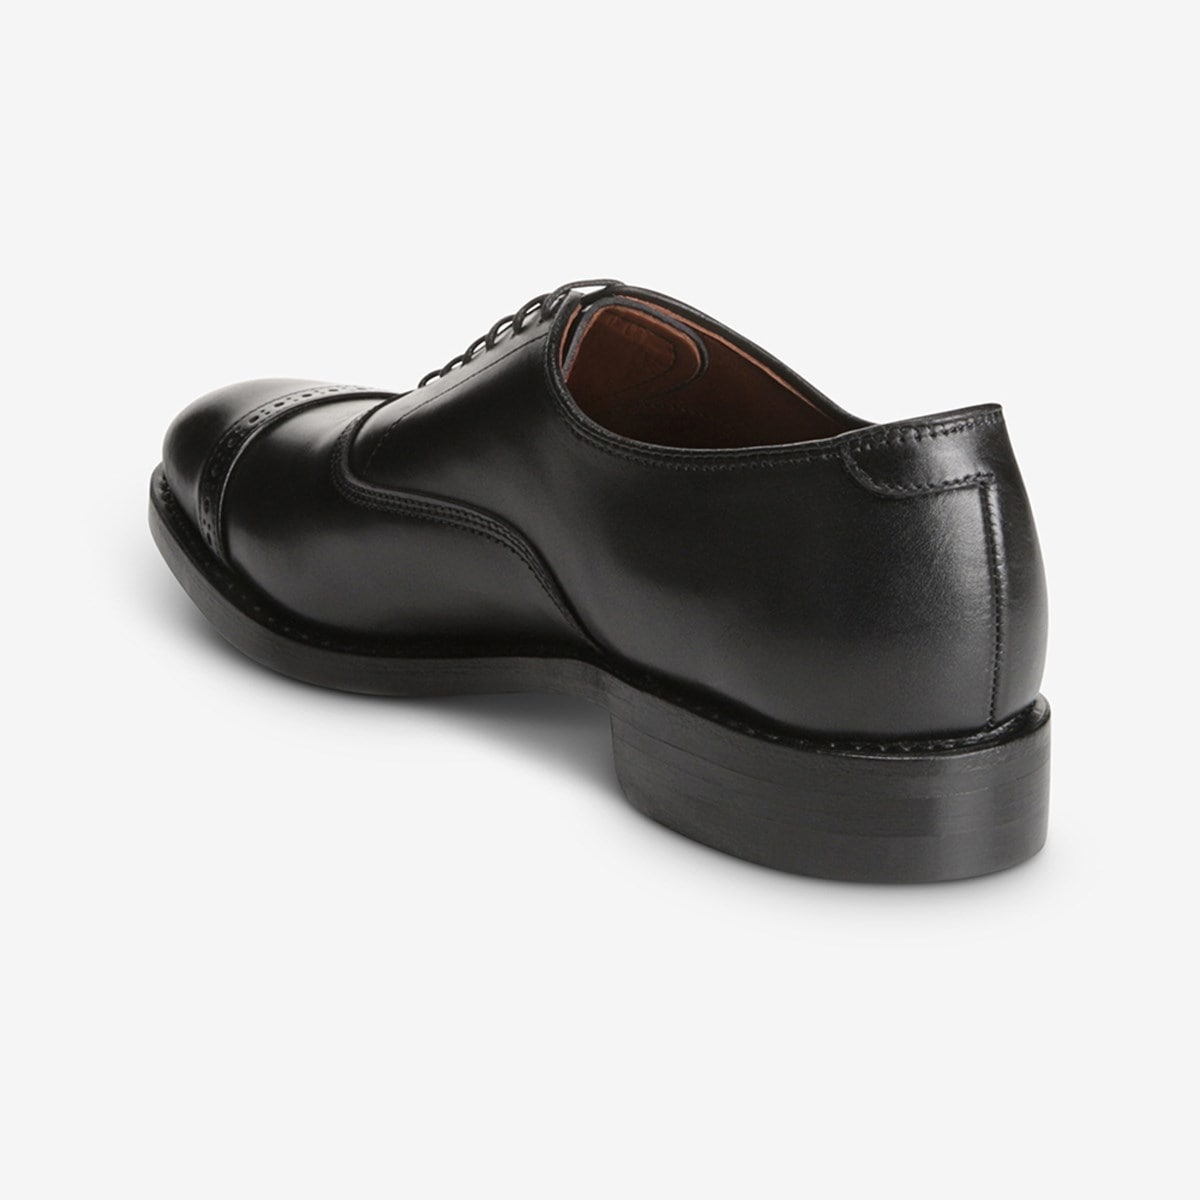 Fifth Avenue Cap-Toe Oxford Dress Shoe with Dainite Sole